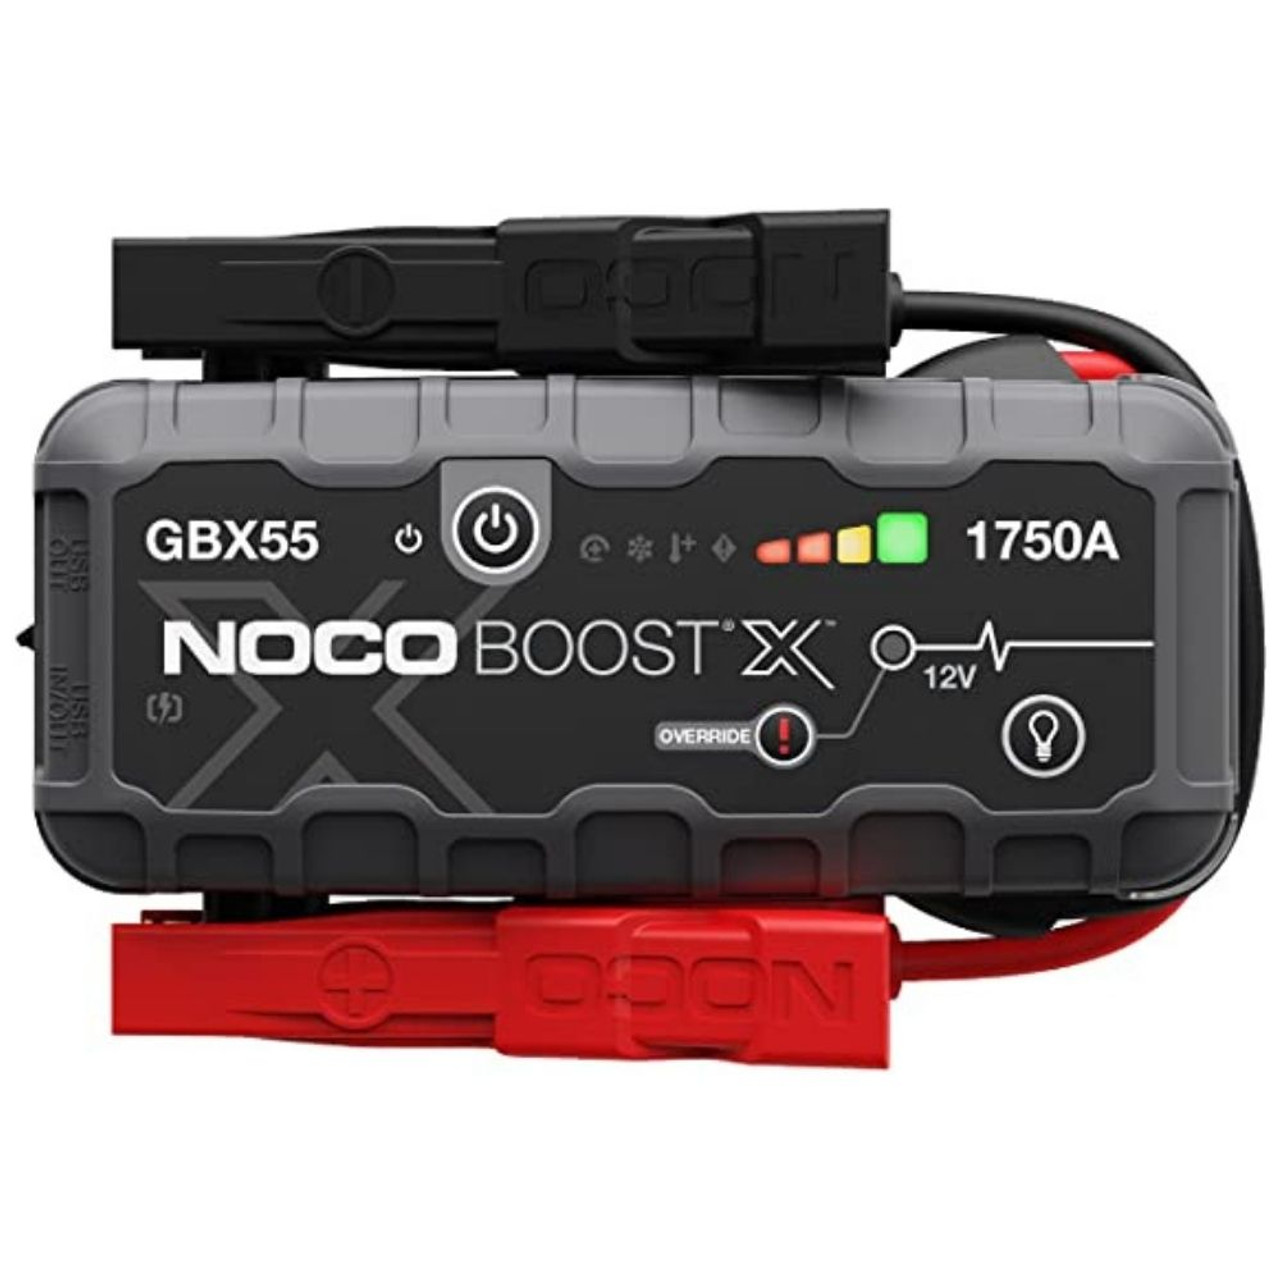 NOCO GB70 Genius Boost HD 2000 Amp 12V UltraSafe Lithium Jump Starter